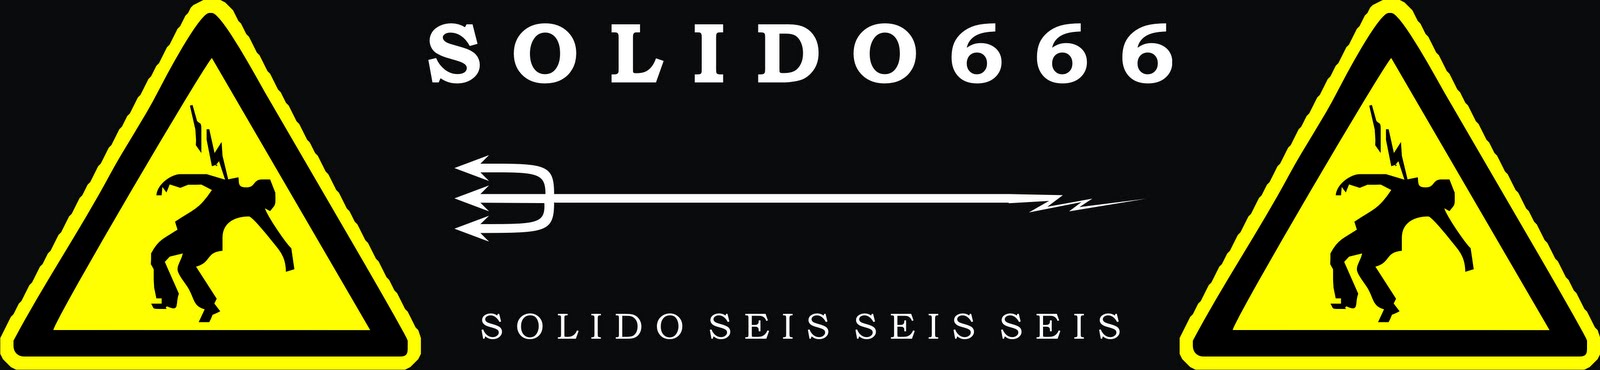 SOLIDO666